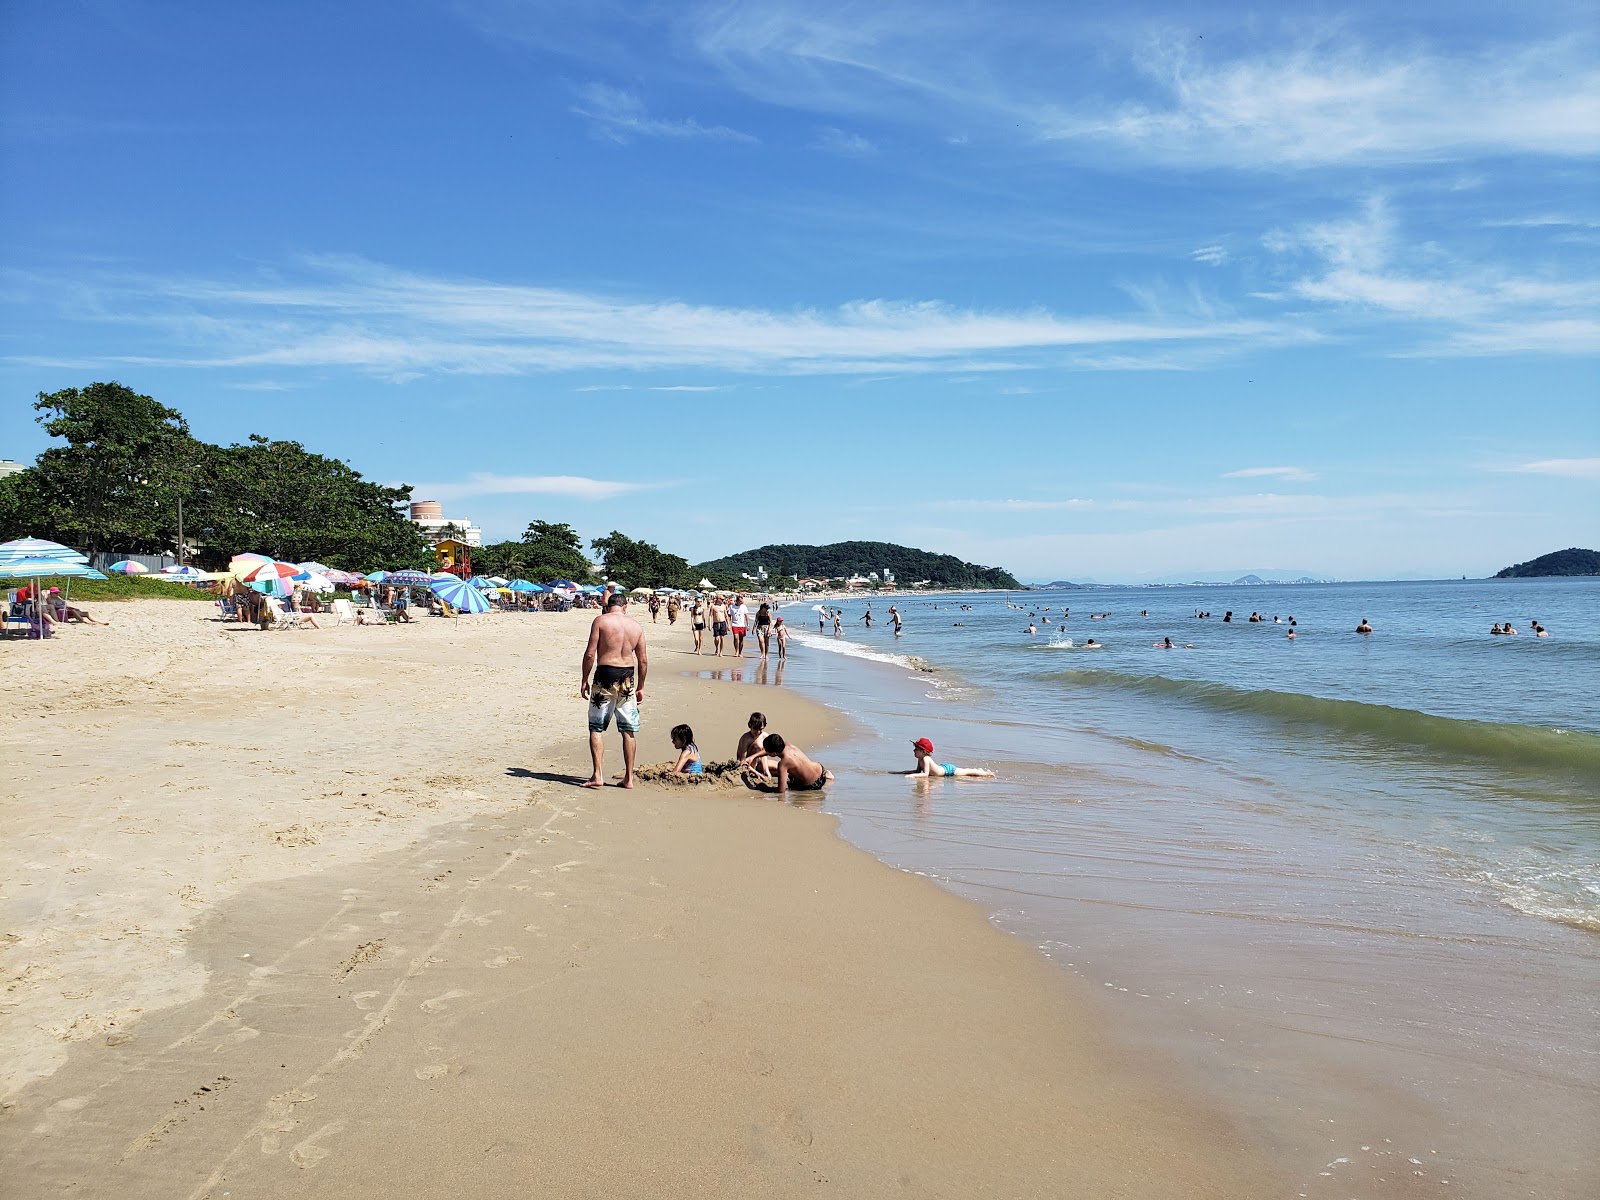 Fotografija Plaža Armação z turkizna voda površino